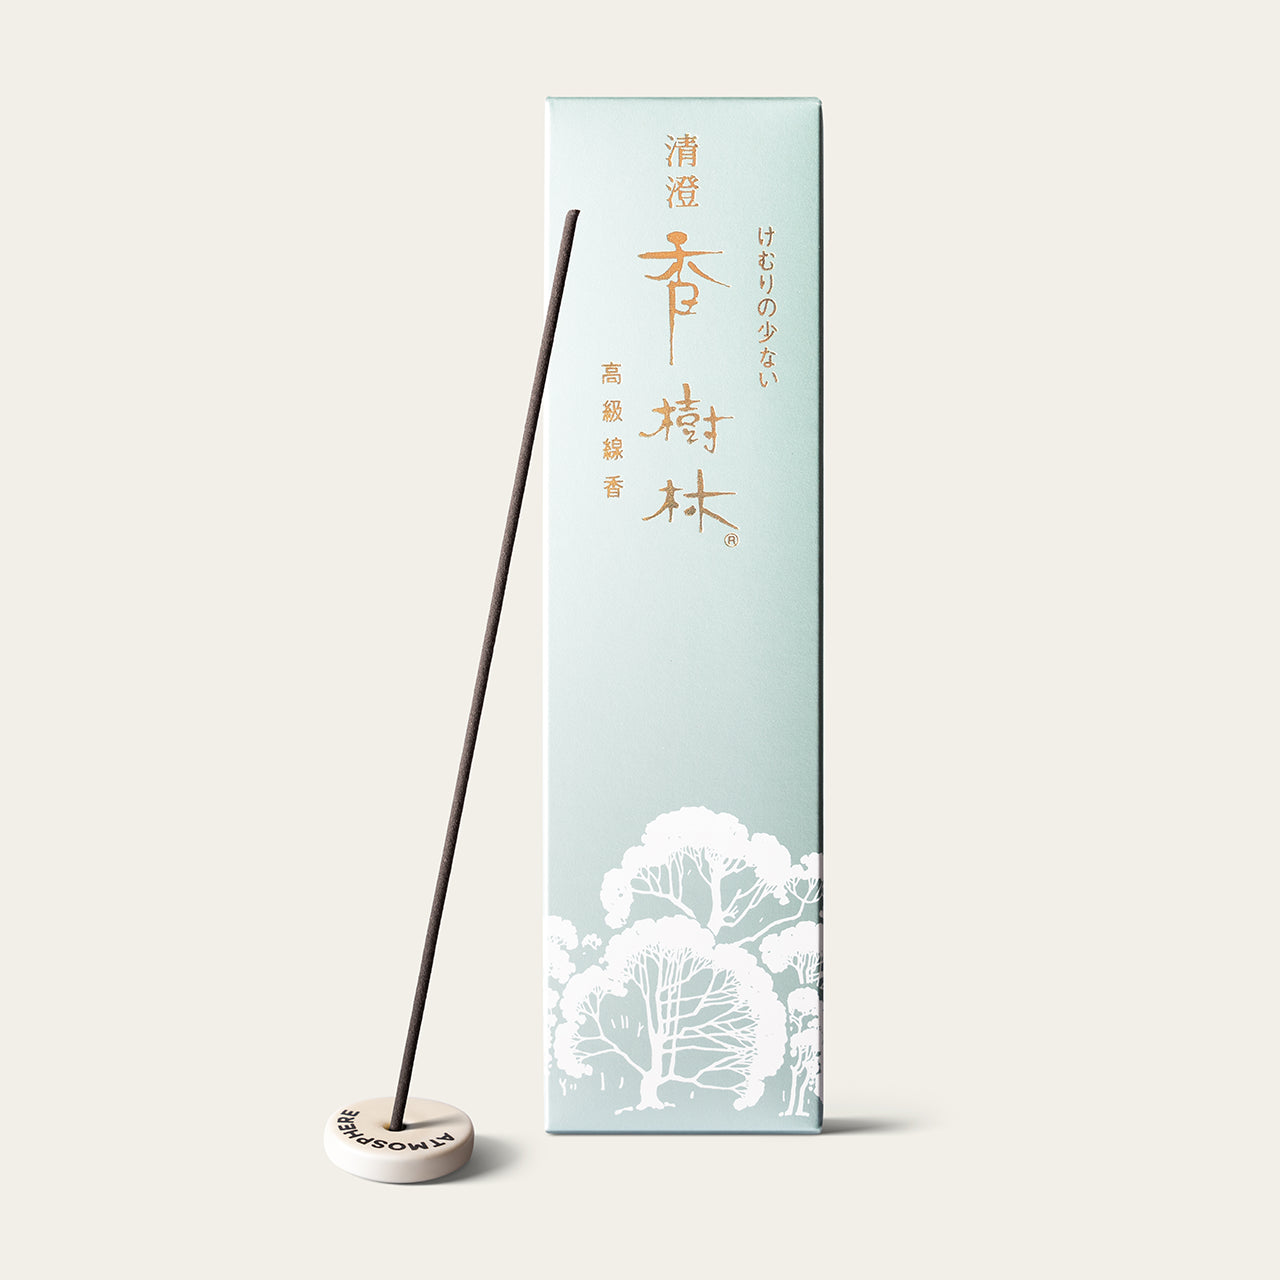 Gyokushodo Seicho Kojurin Purifying Japanese incense sticks (25 sticks) with Atmosphere ceramic incense holder